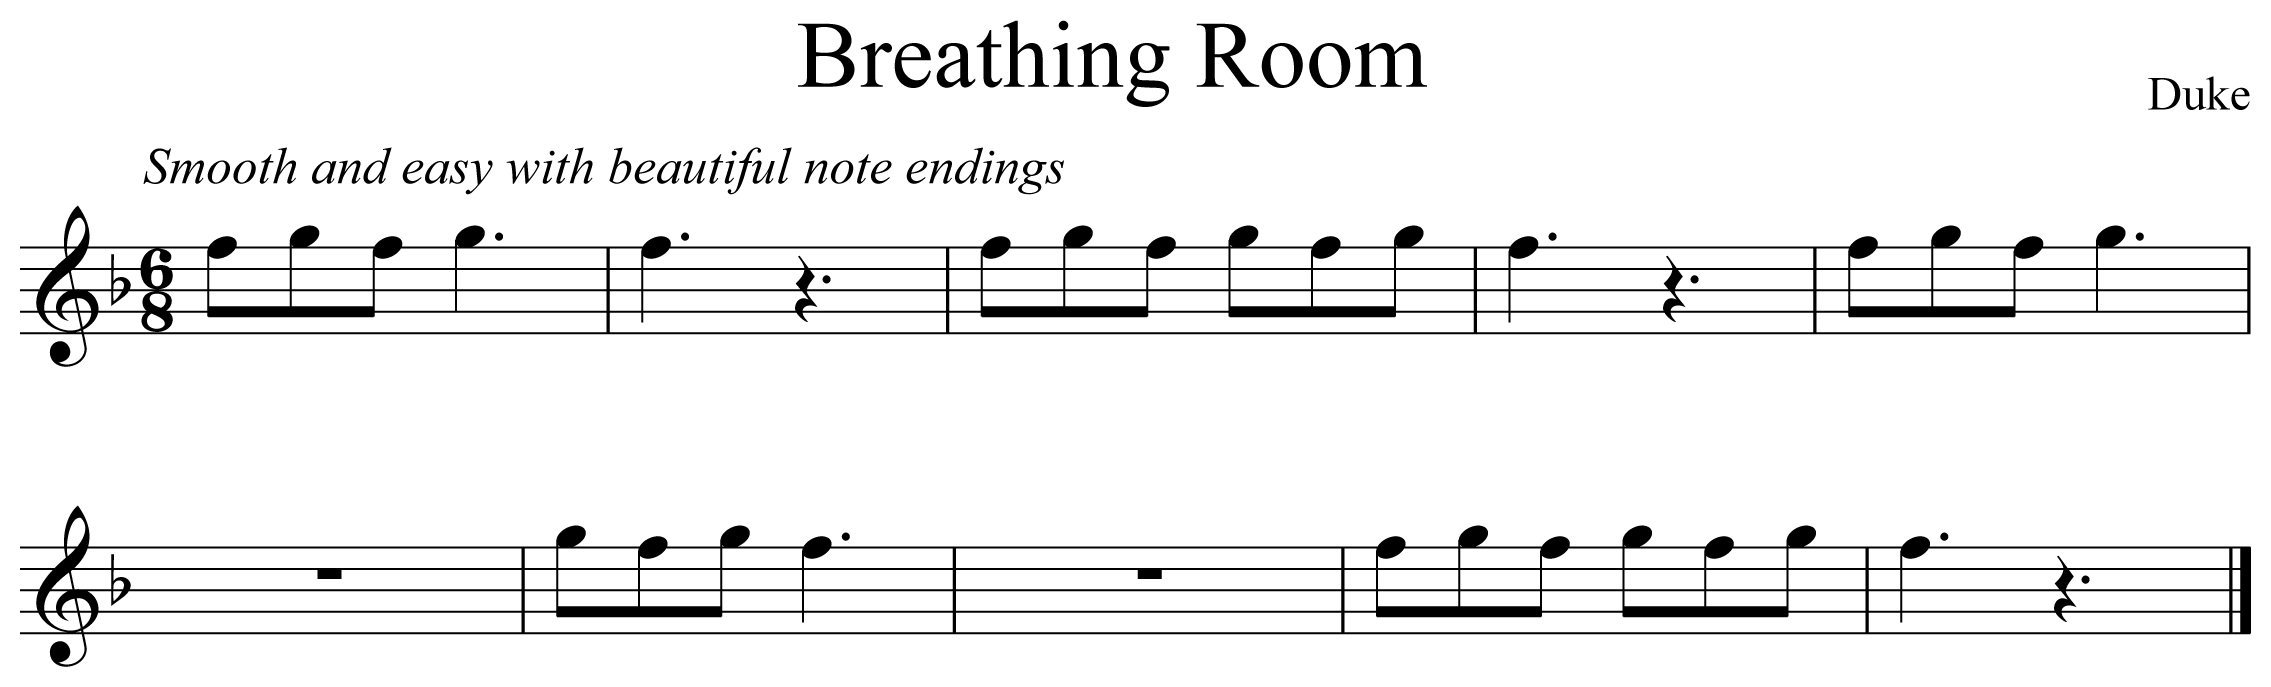 Breathing Room Music Notation Flute